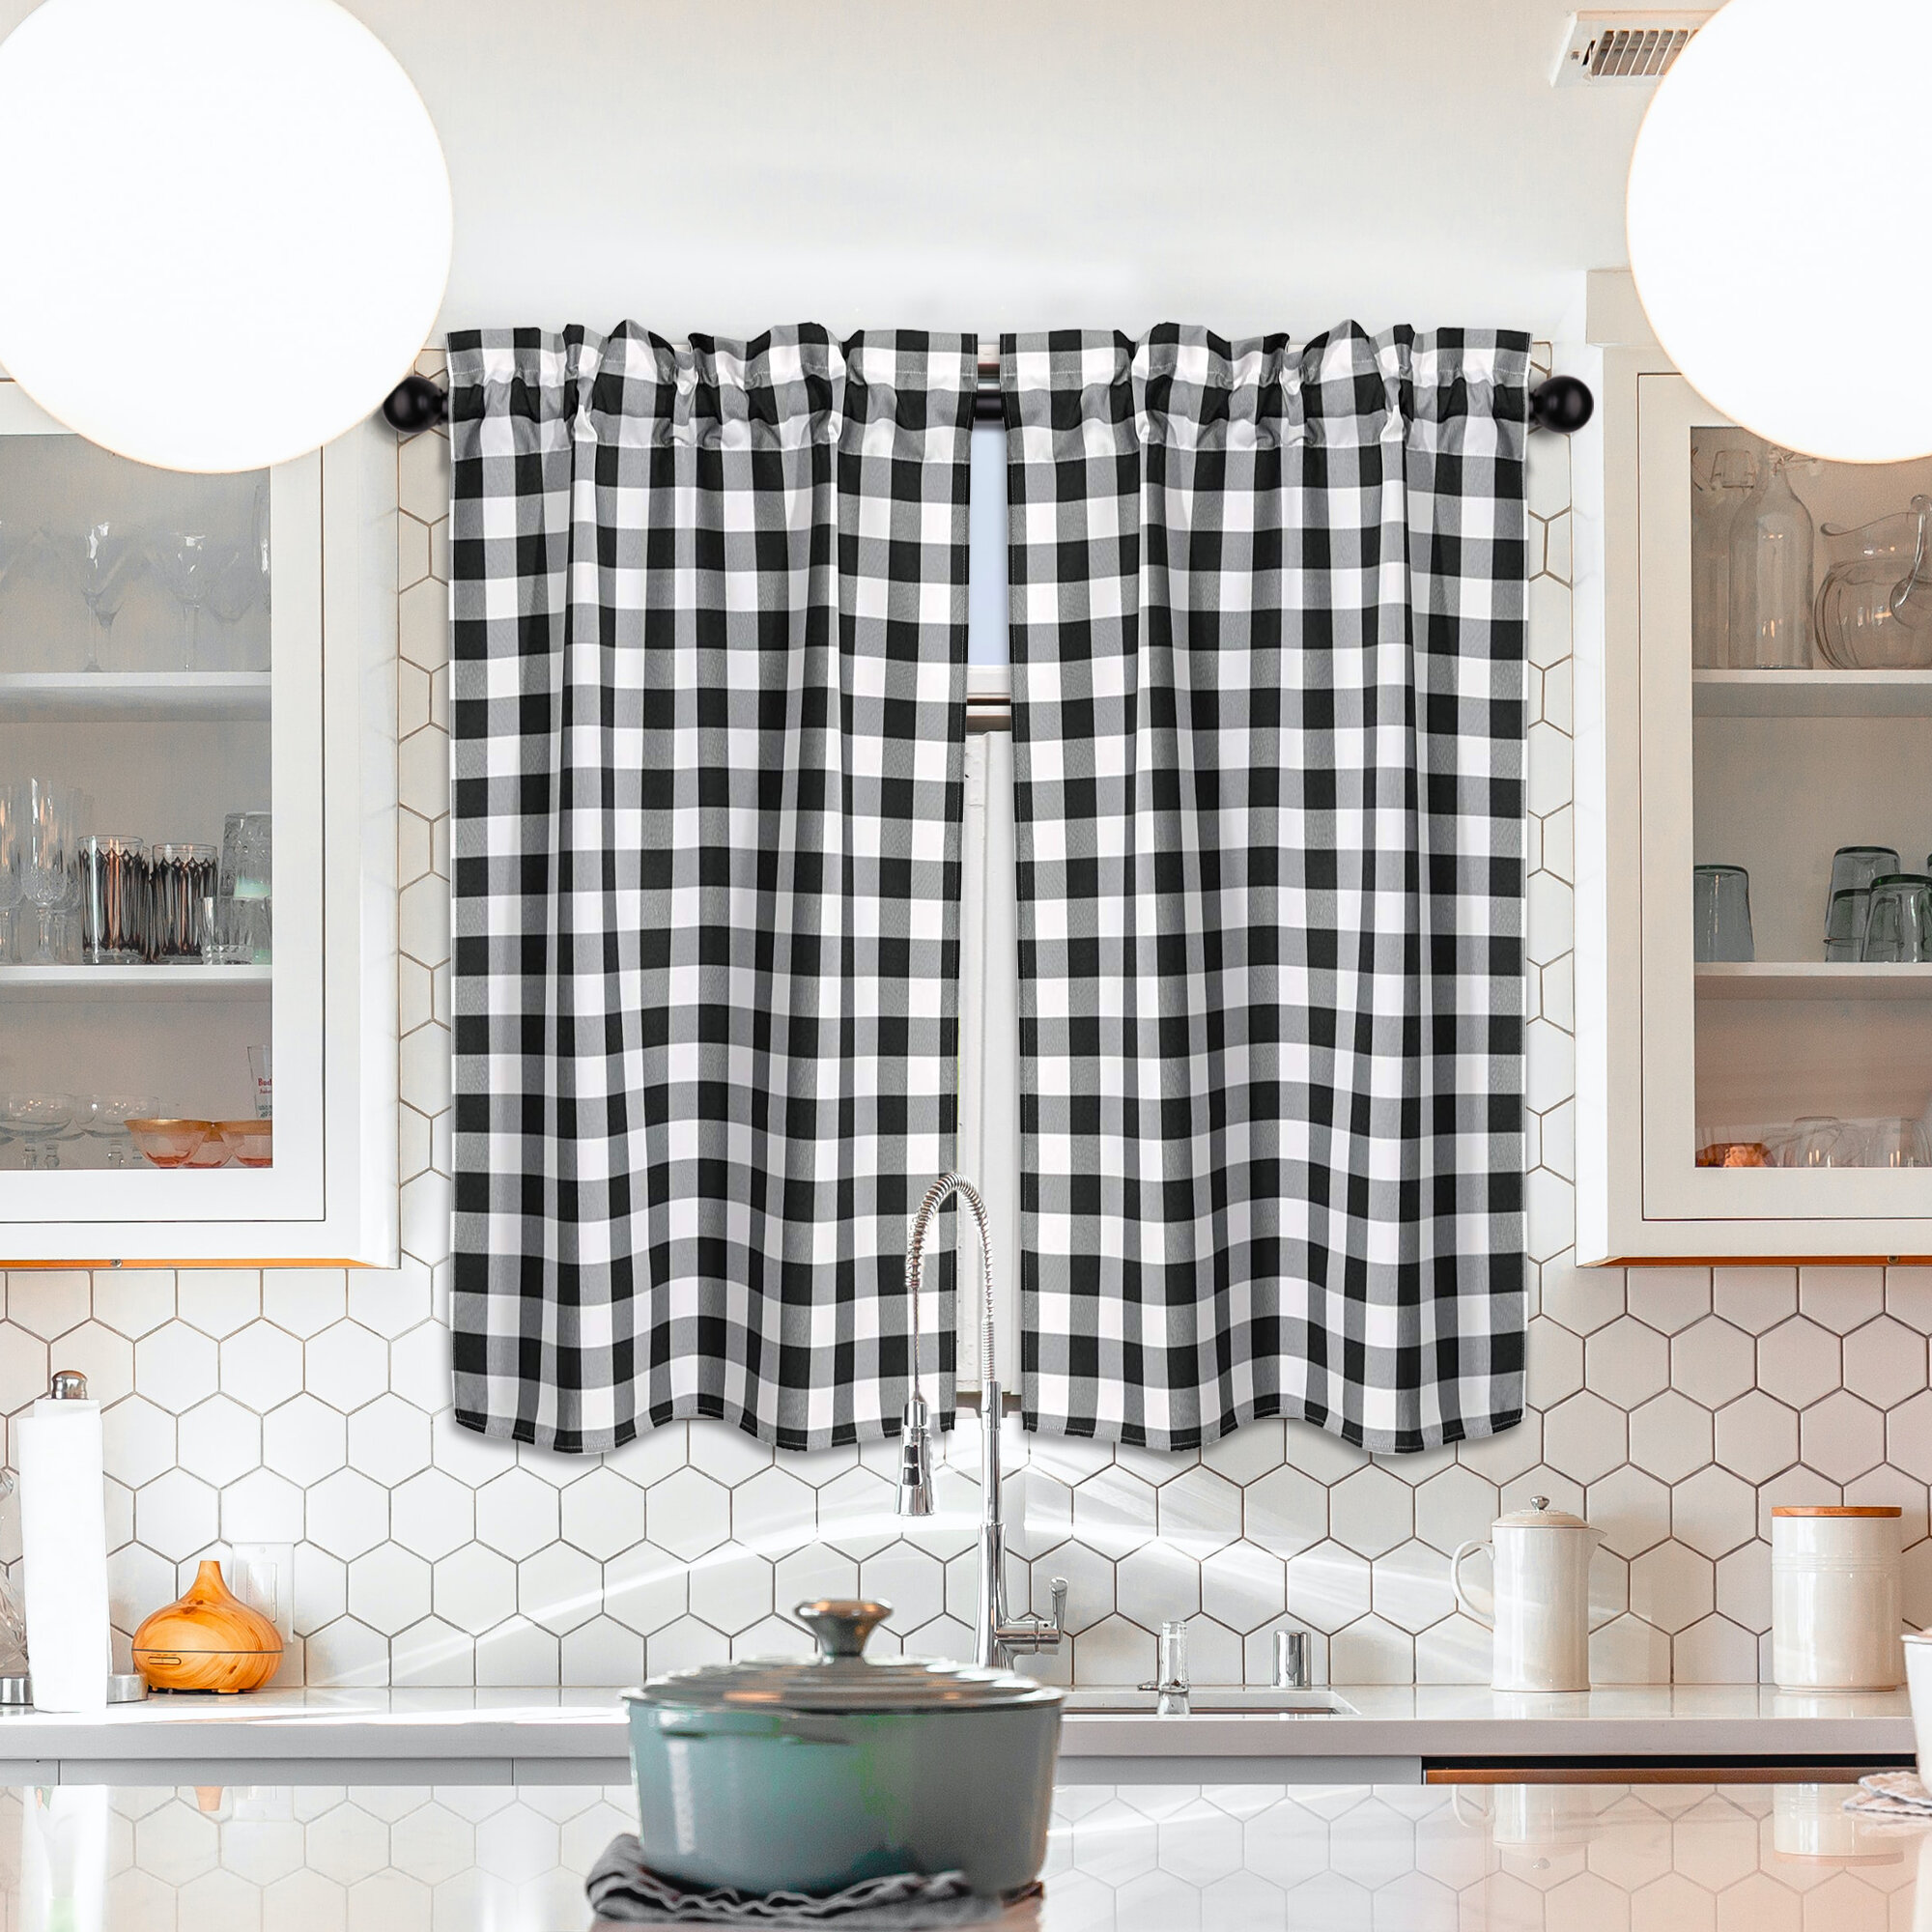 Woven Trends Farmhouse Curtains Kitchen Decor, Buffalo Plaid